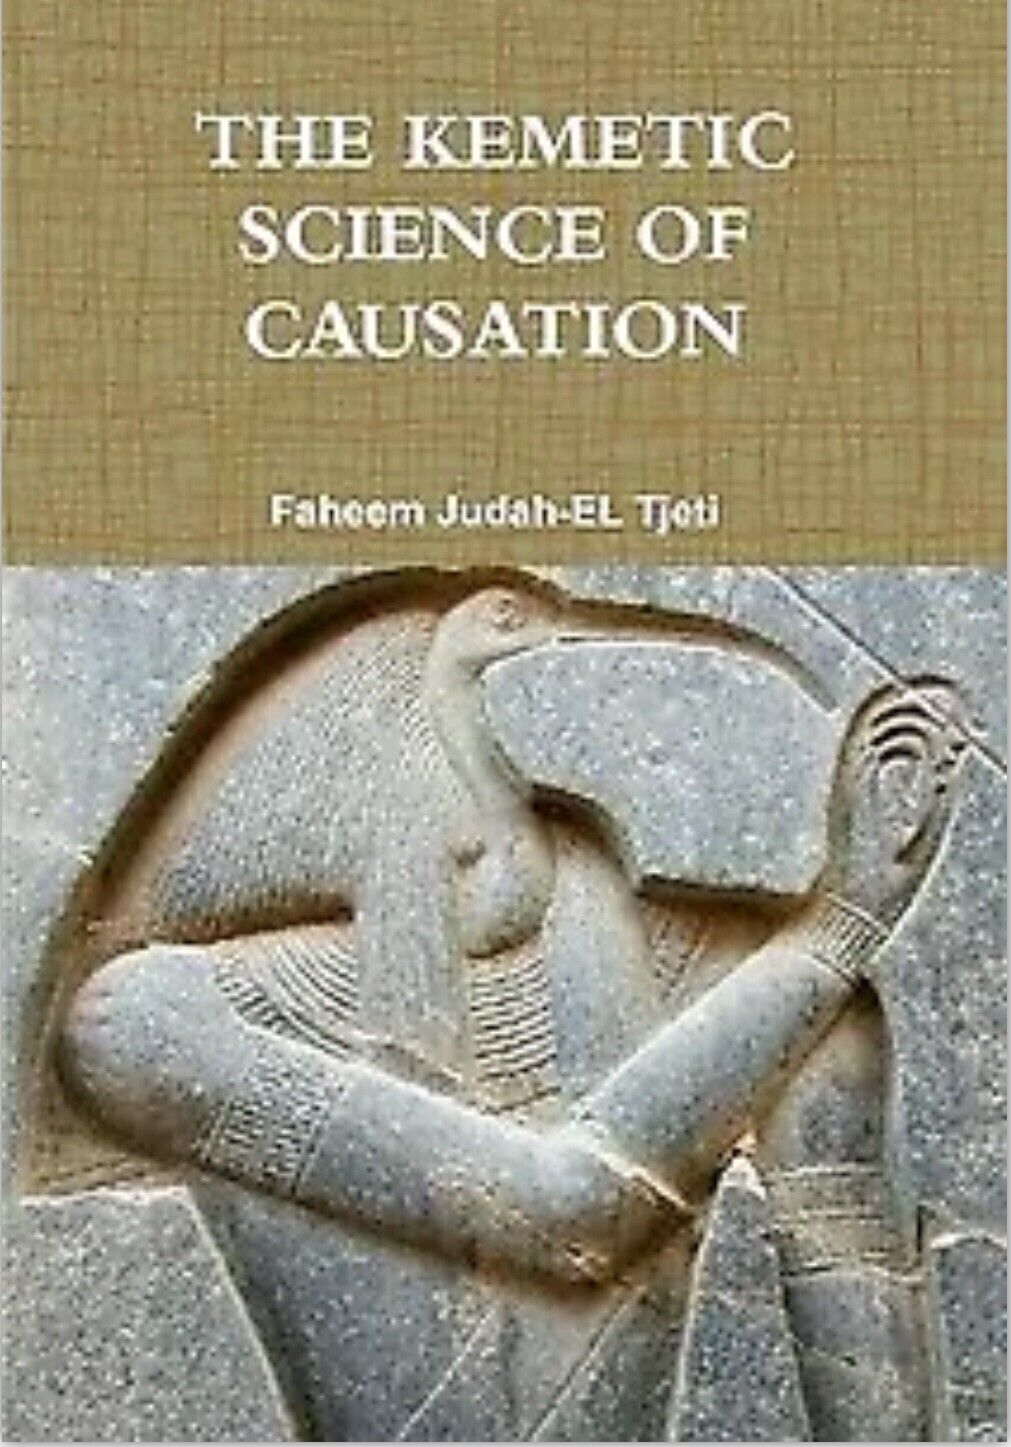 Rare The Kemetic Science of Causation by Faheem Judah-El / Dr. York / Dr. Ben